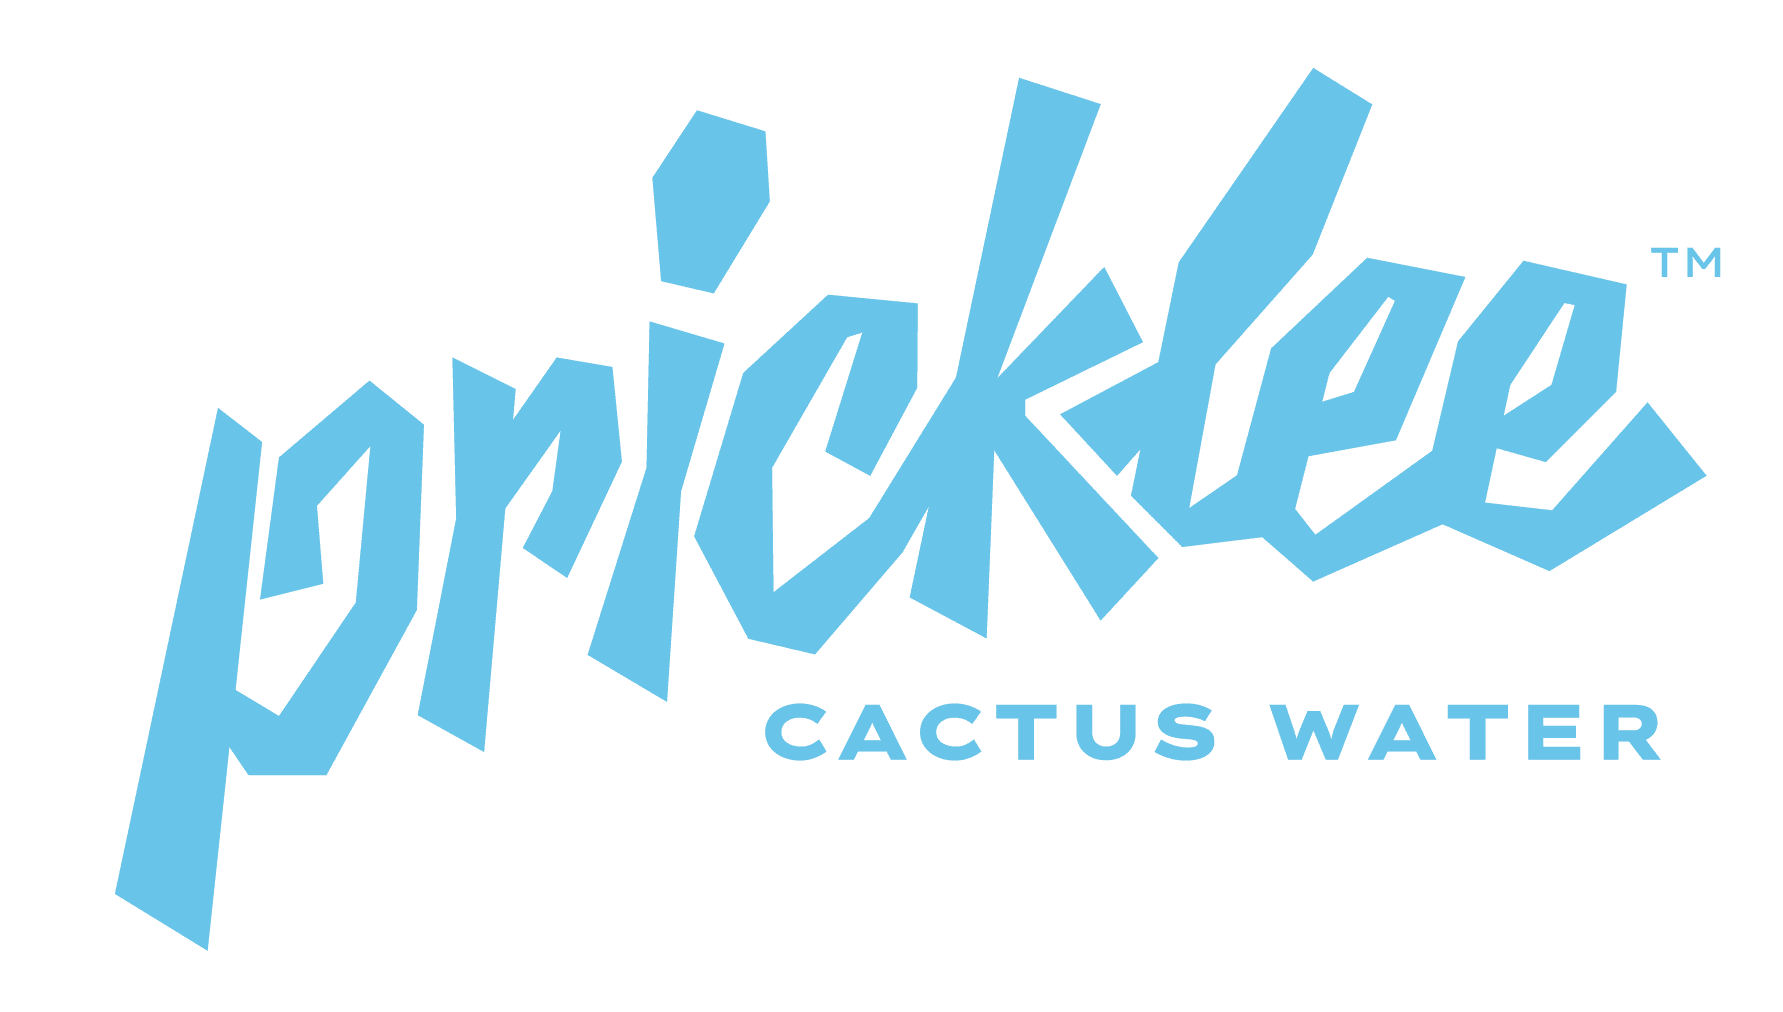 pricklee logo image